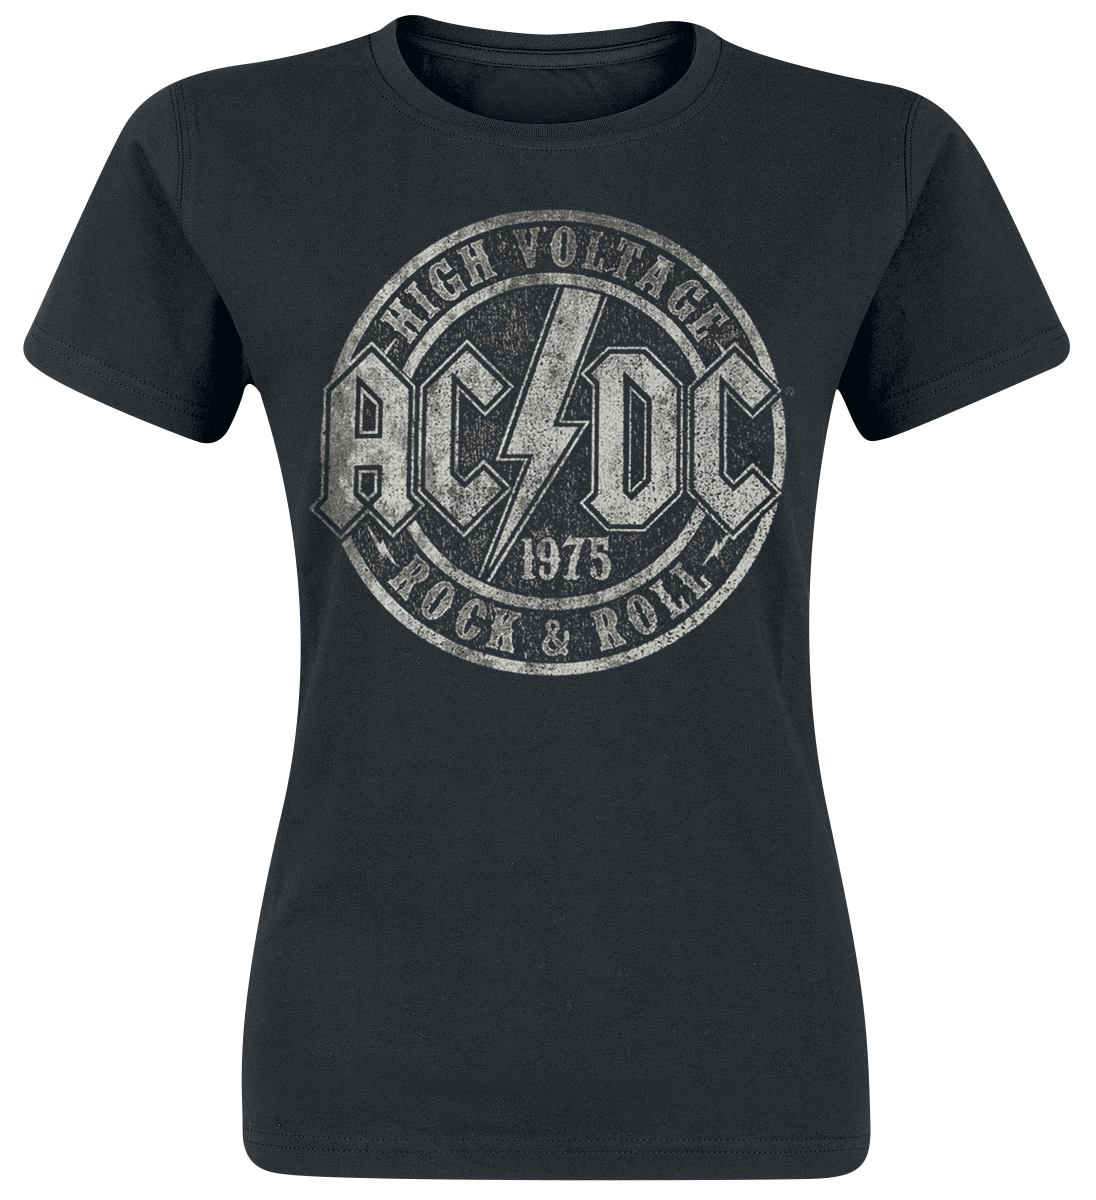 AC/DC - High Voltage 1975 - Girls shirt - black image